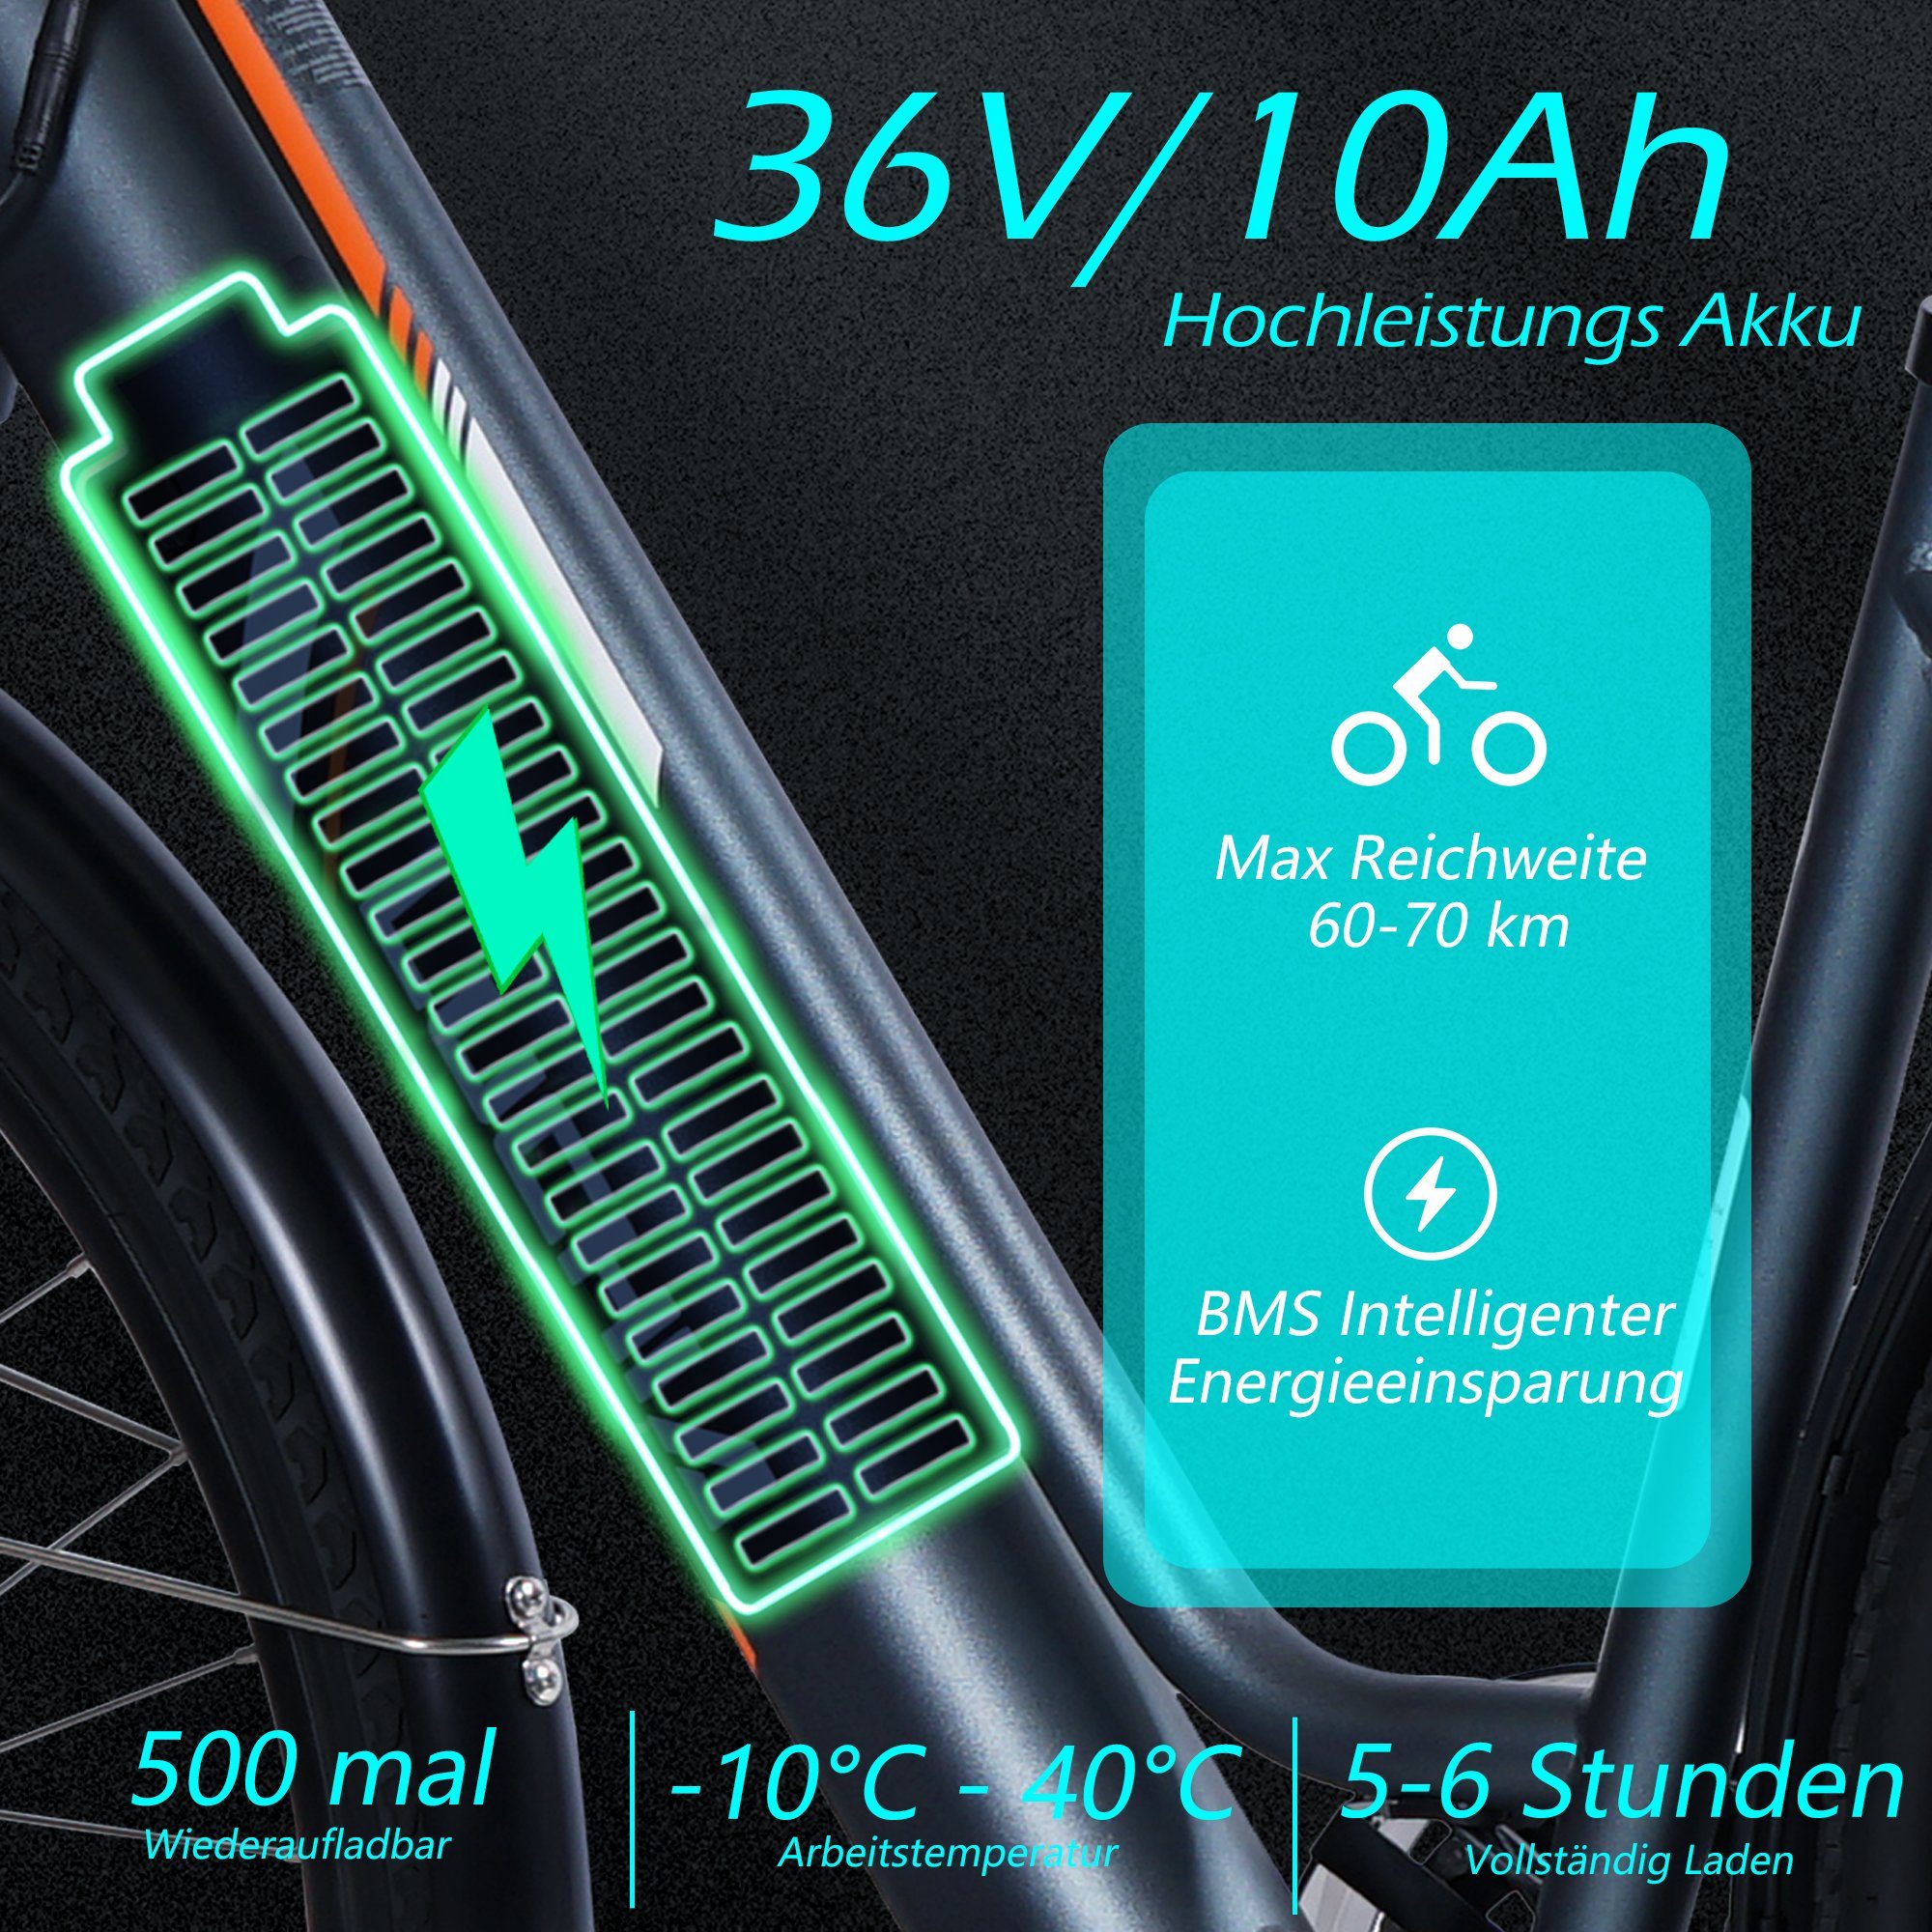 MTB, front Gehunterstützungsmodus, basket rear (1.5Zoll Smart-Bike, 6km/h km,120kg, E-Bike and km/h Elektrofahrrad,E-BIKE,250W, 36V/10Ah Fahrmodi städtisches 2 LCD Fangqi Blau städtisches with 6 Pendlerfahrrad), Elektrofahrrad, aluminum Gehhilfemodus,Comes 27,5 rack Heckmotor, Display, (kraftunterstützt/Pedal),25km/h, 250W Zoll Akku,25km/h, 55–65